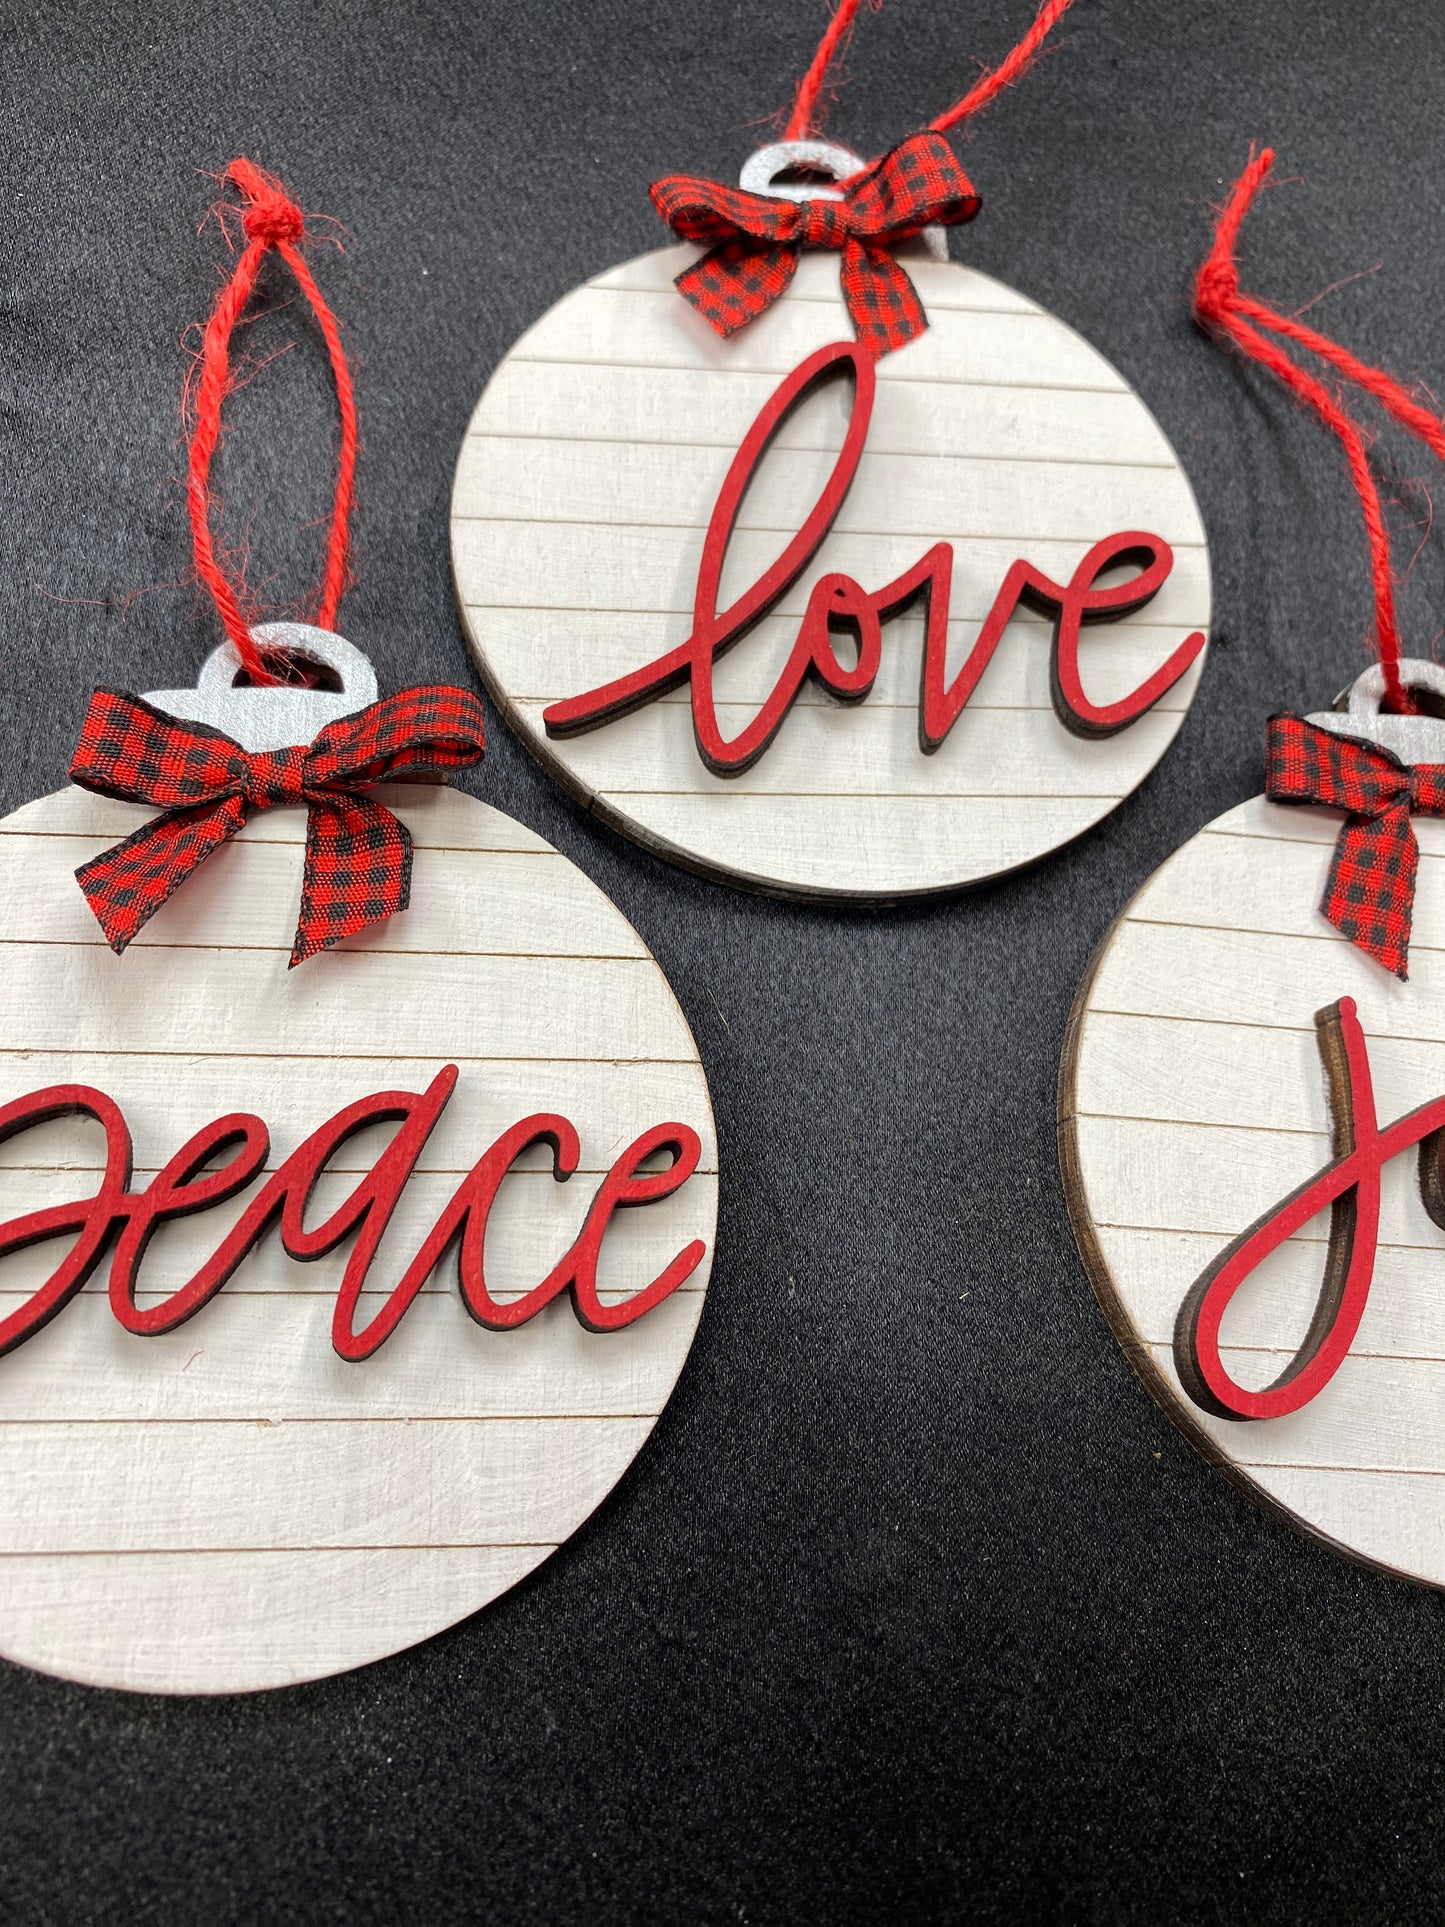 Peace Love Joy Shiplap Round Christmas Ornaments  Laser Cut / Engraved Wooden Blank Ornament